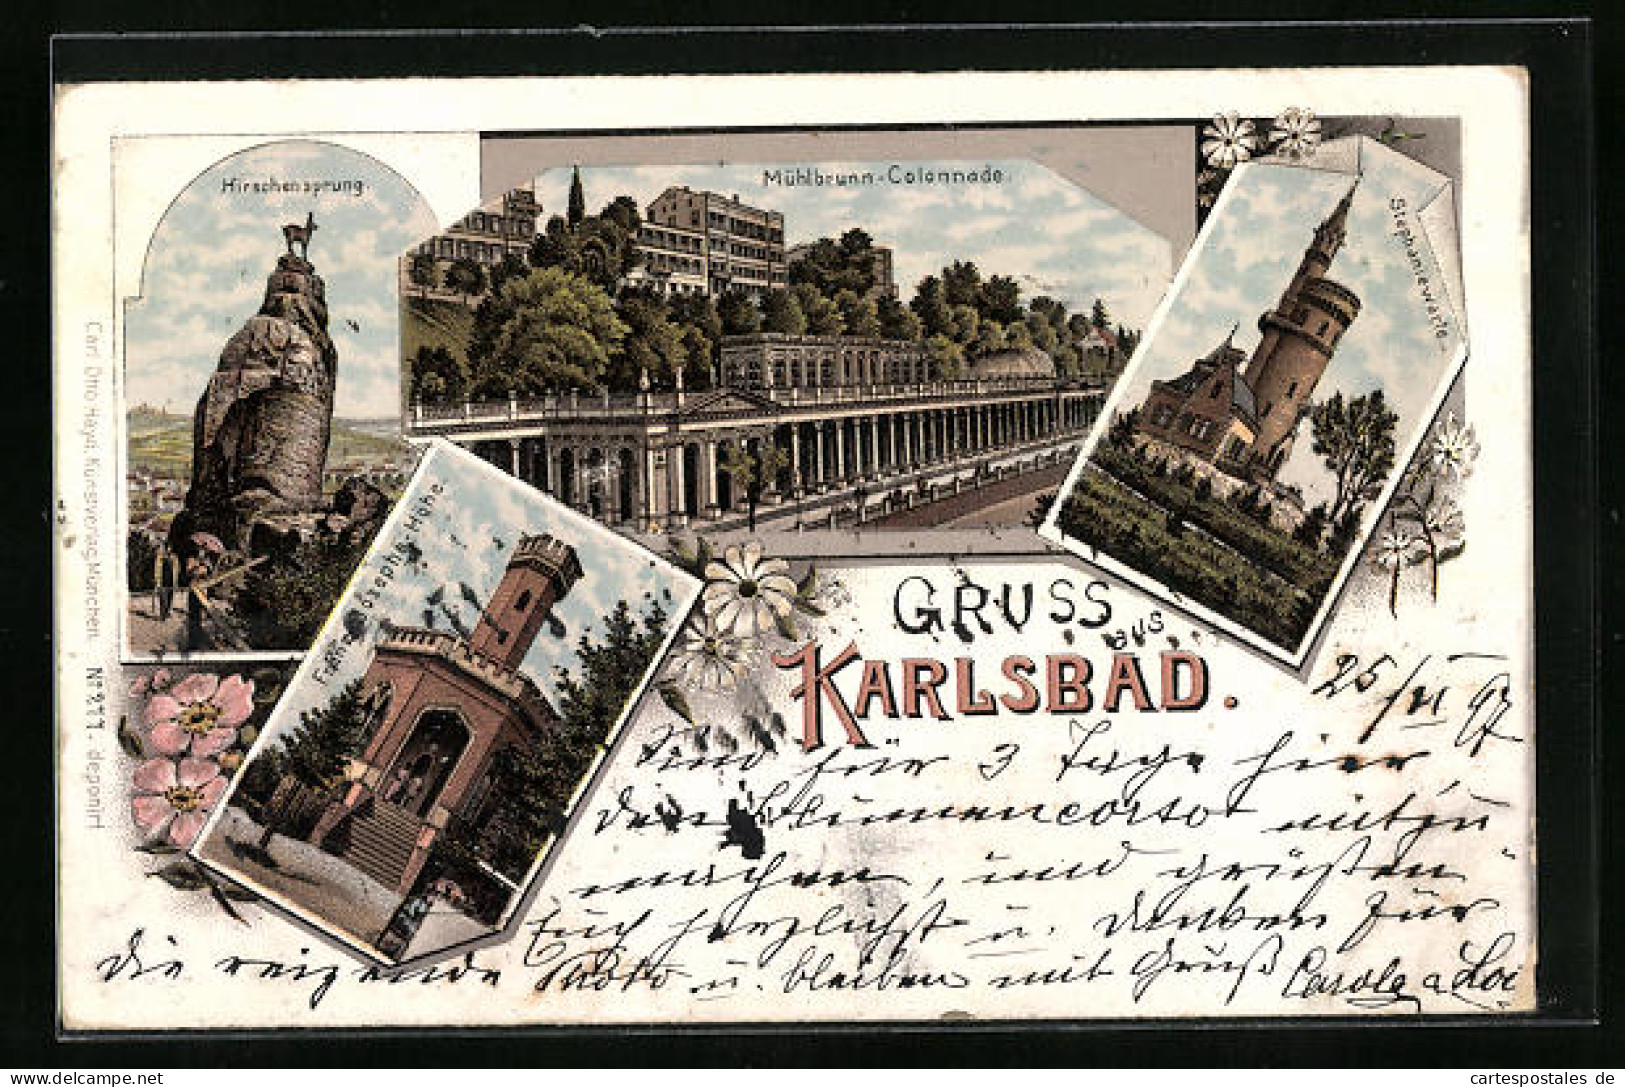 Lithographie Karlsbad, Mühlbrunn-Colonnade, Franz-Josephs-Höhe, Stephaniewarte  - Repubblica Ceca